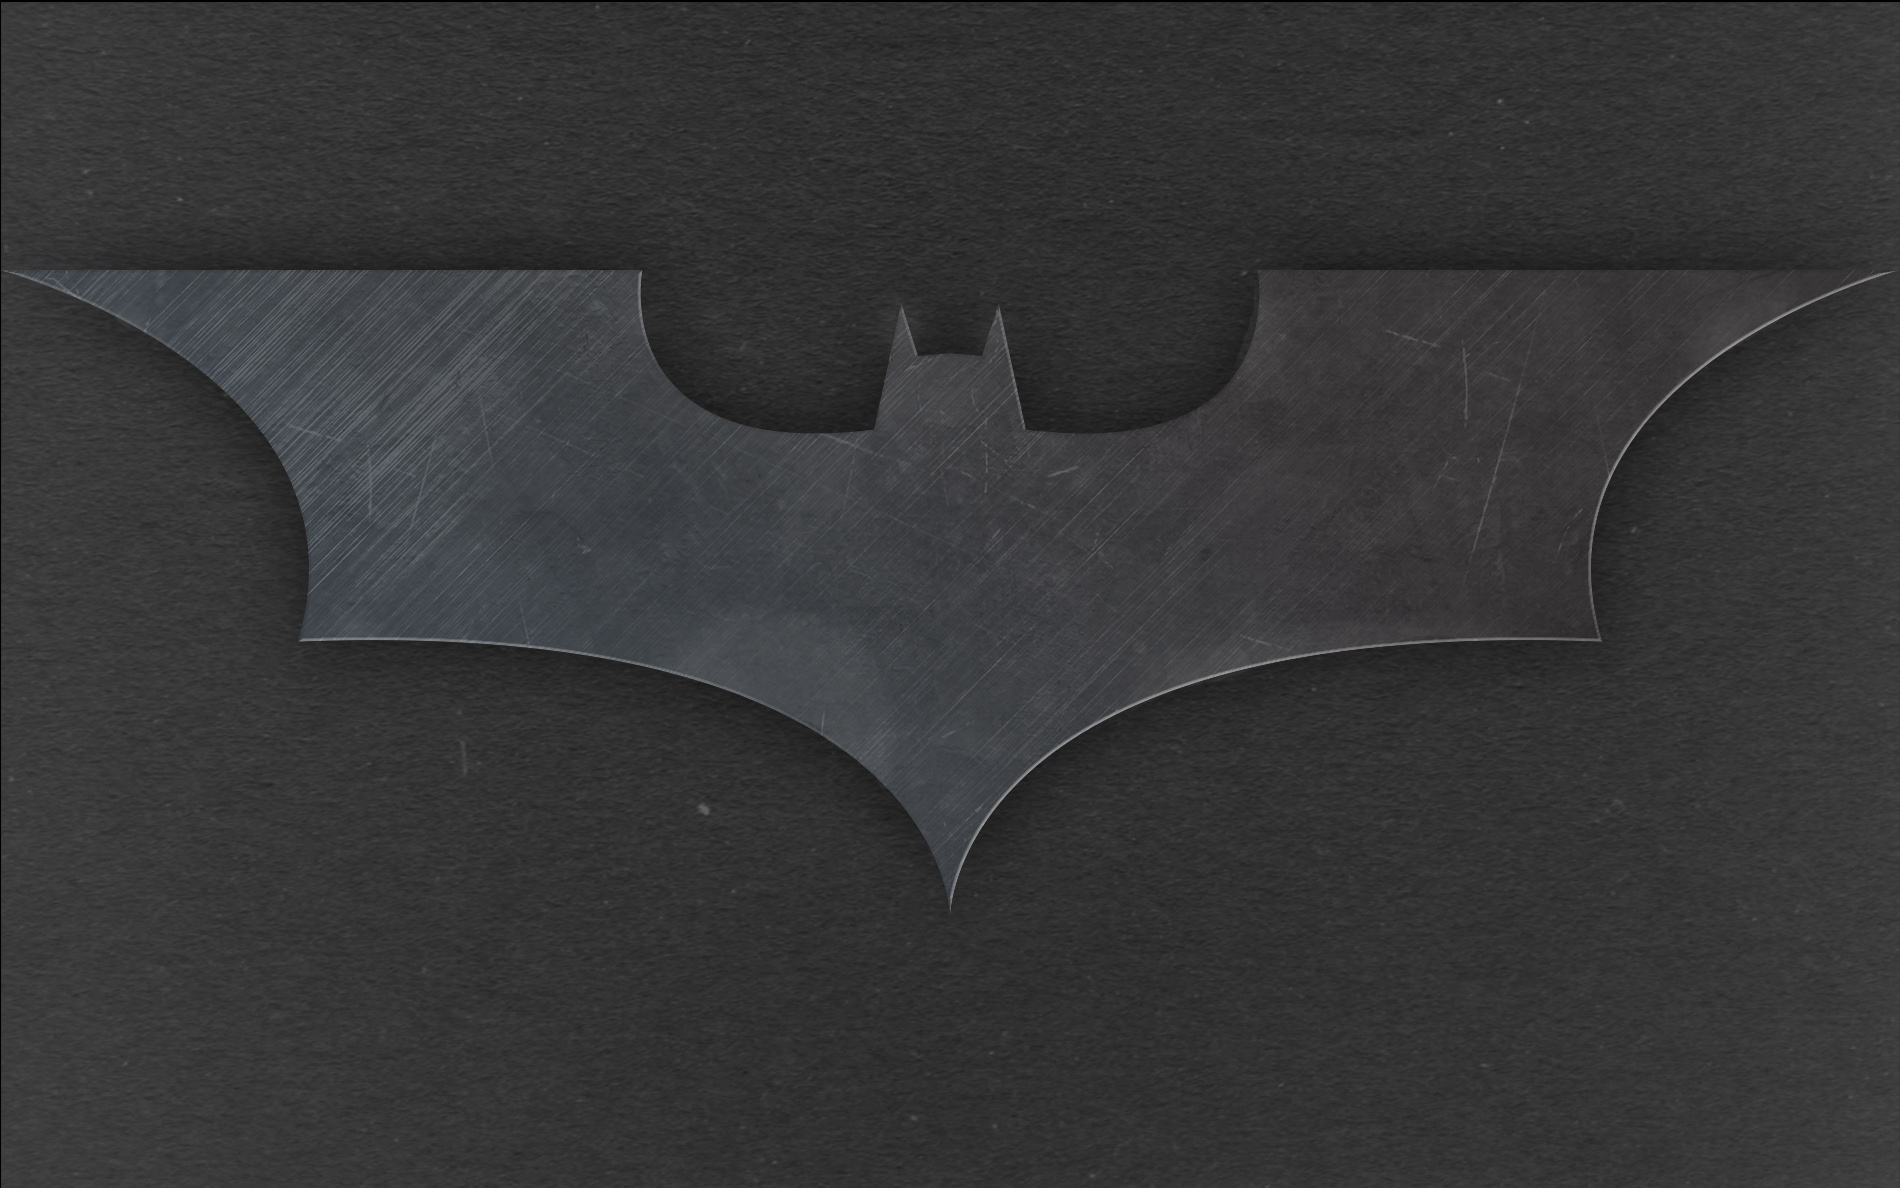 Bat logo attempt 1 by zulumacman on DeviantArt